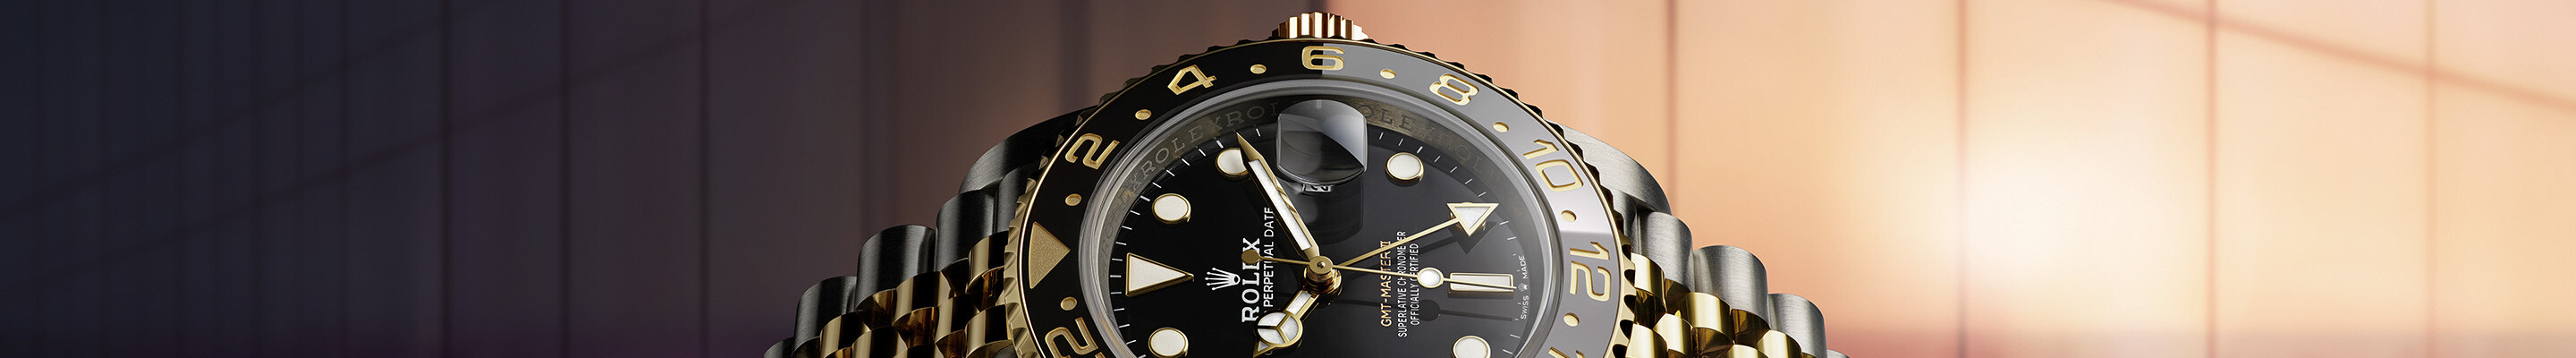 Rolex GMT-Master II at Dubail